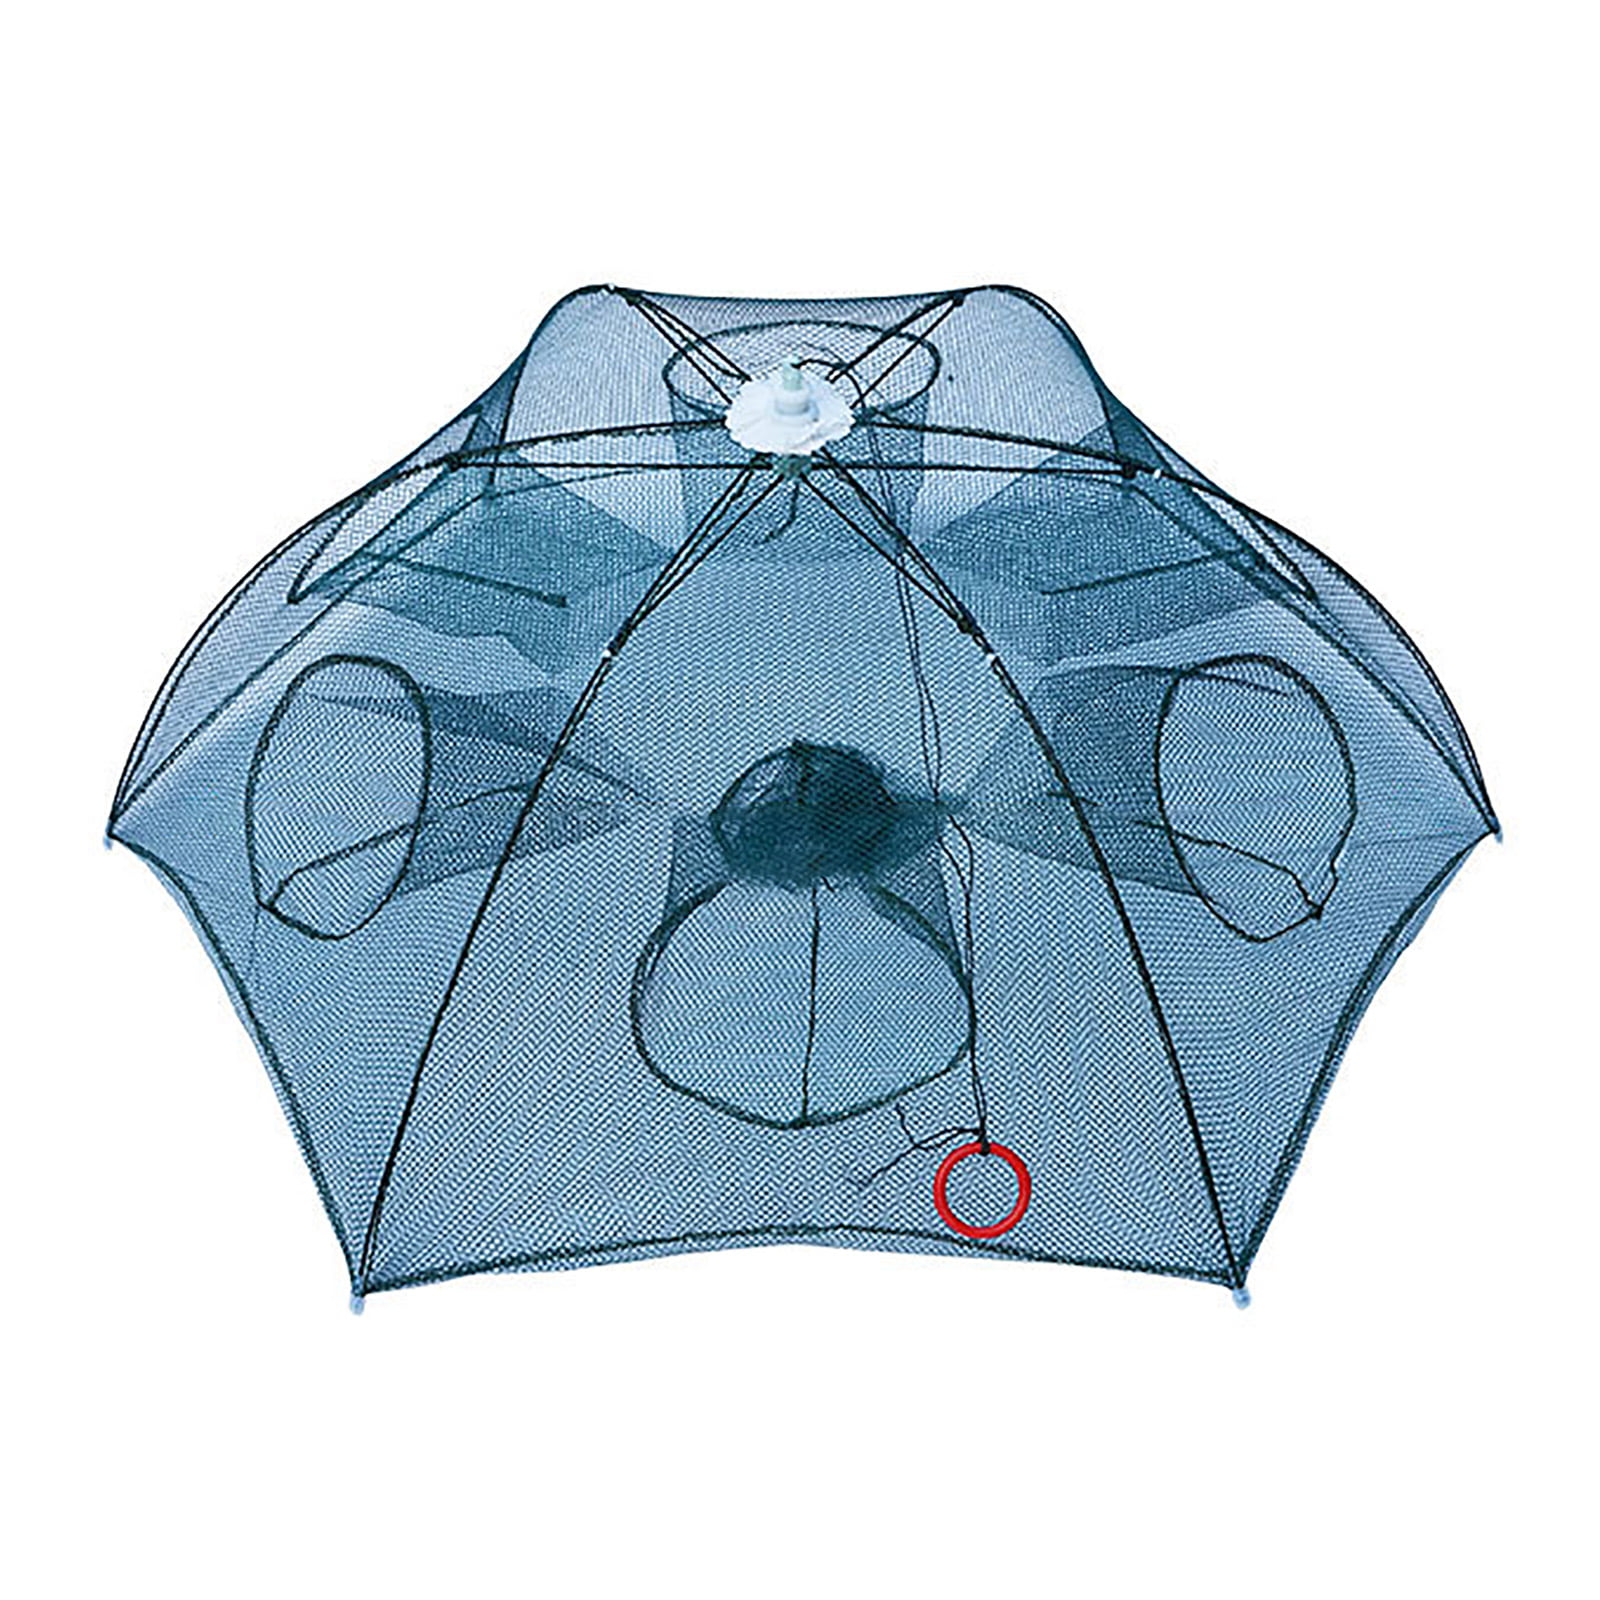 YIDEDE Fishing Net Pouring Cage Caterpillar Shrimp Umbrella Design